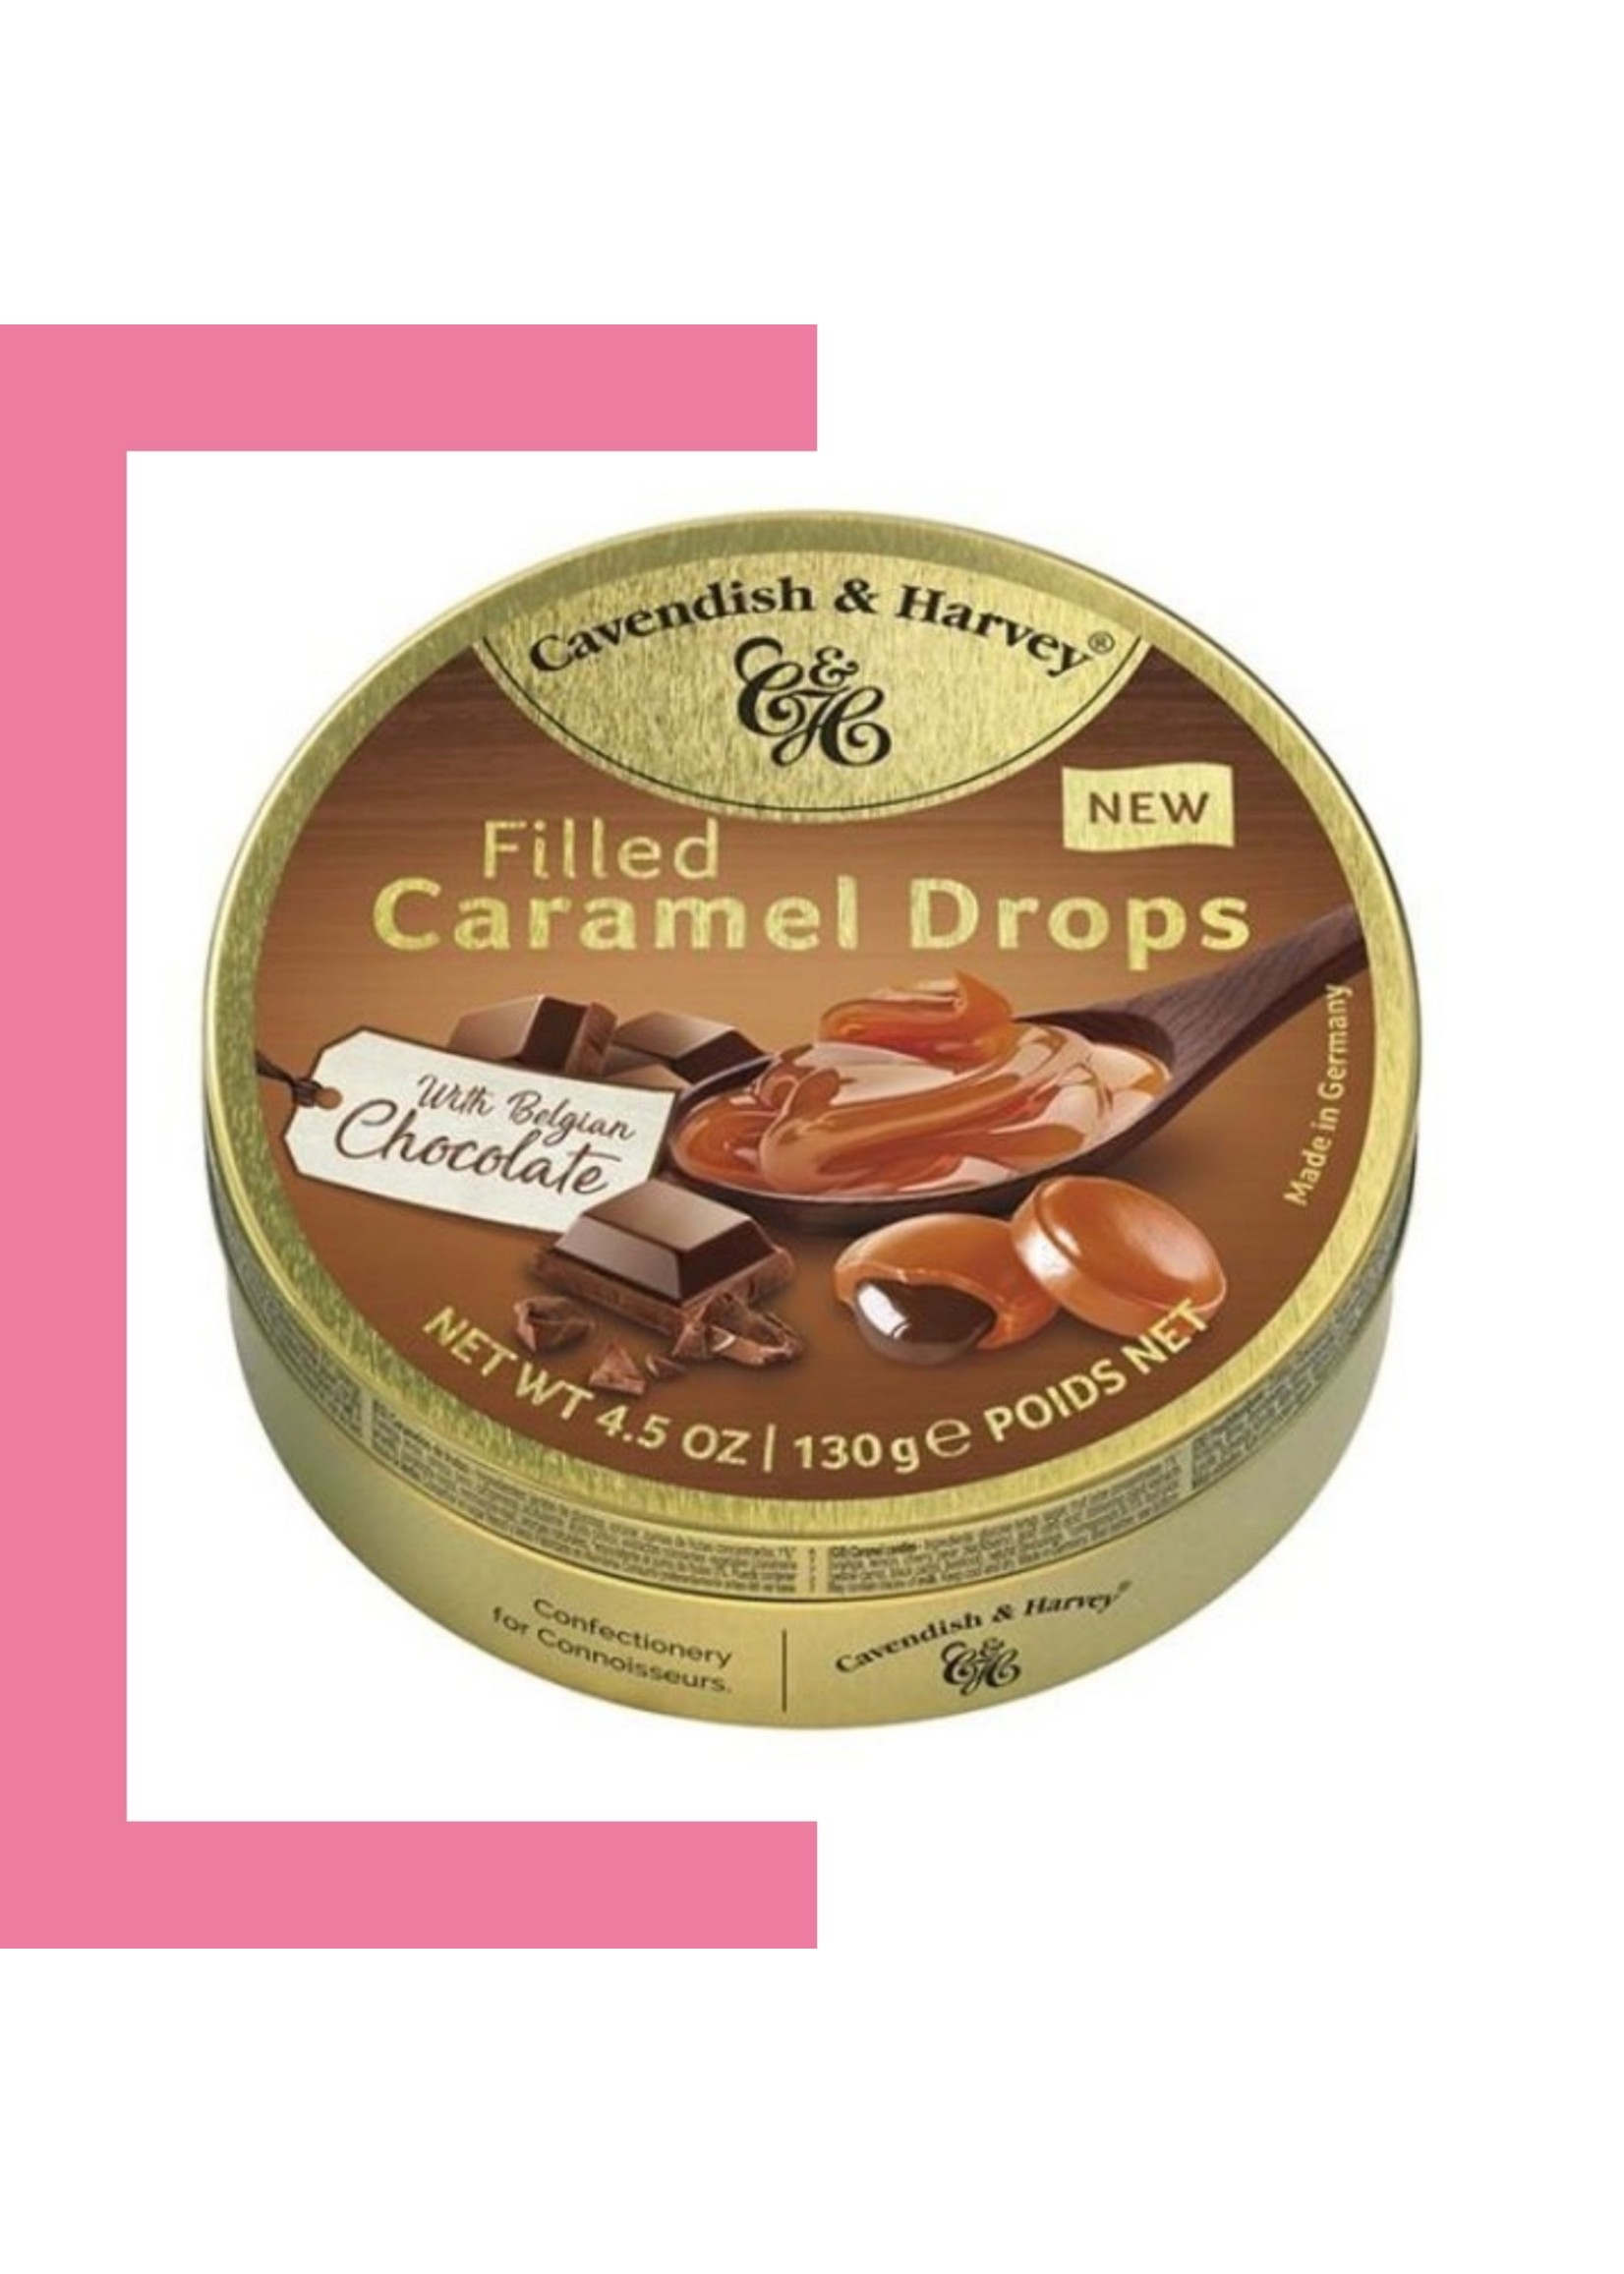 Cavendish & Harvey Chocolate filled caramel